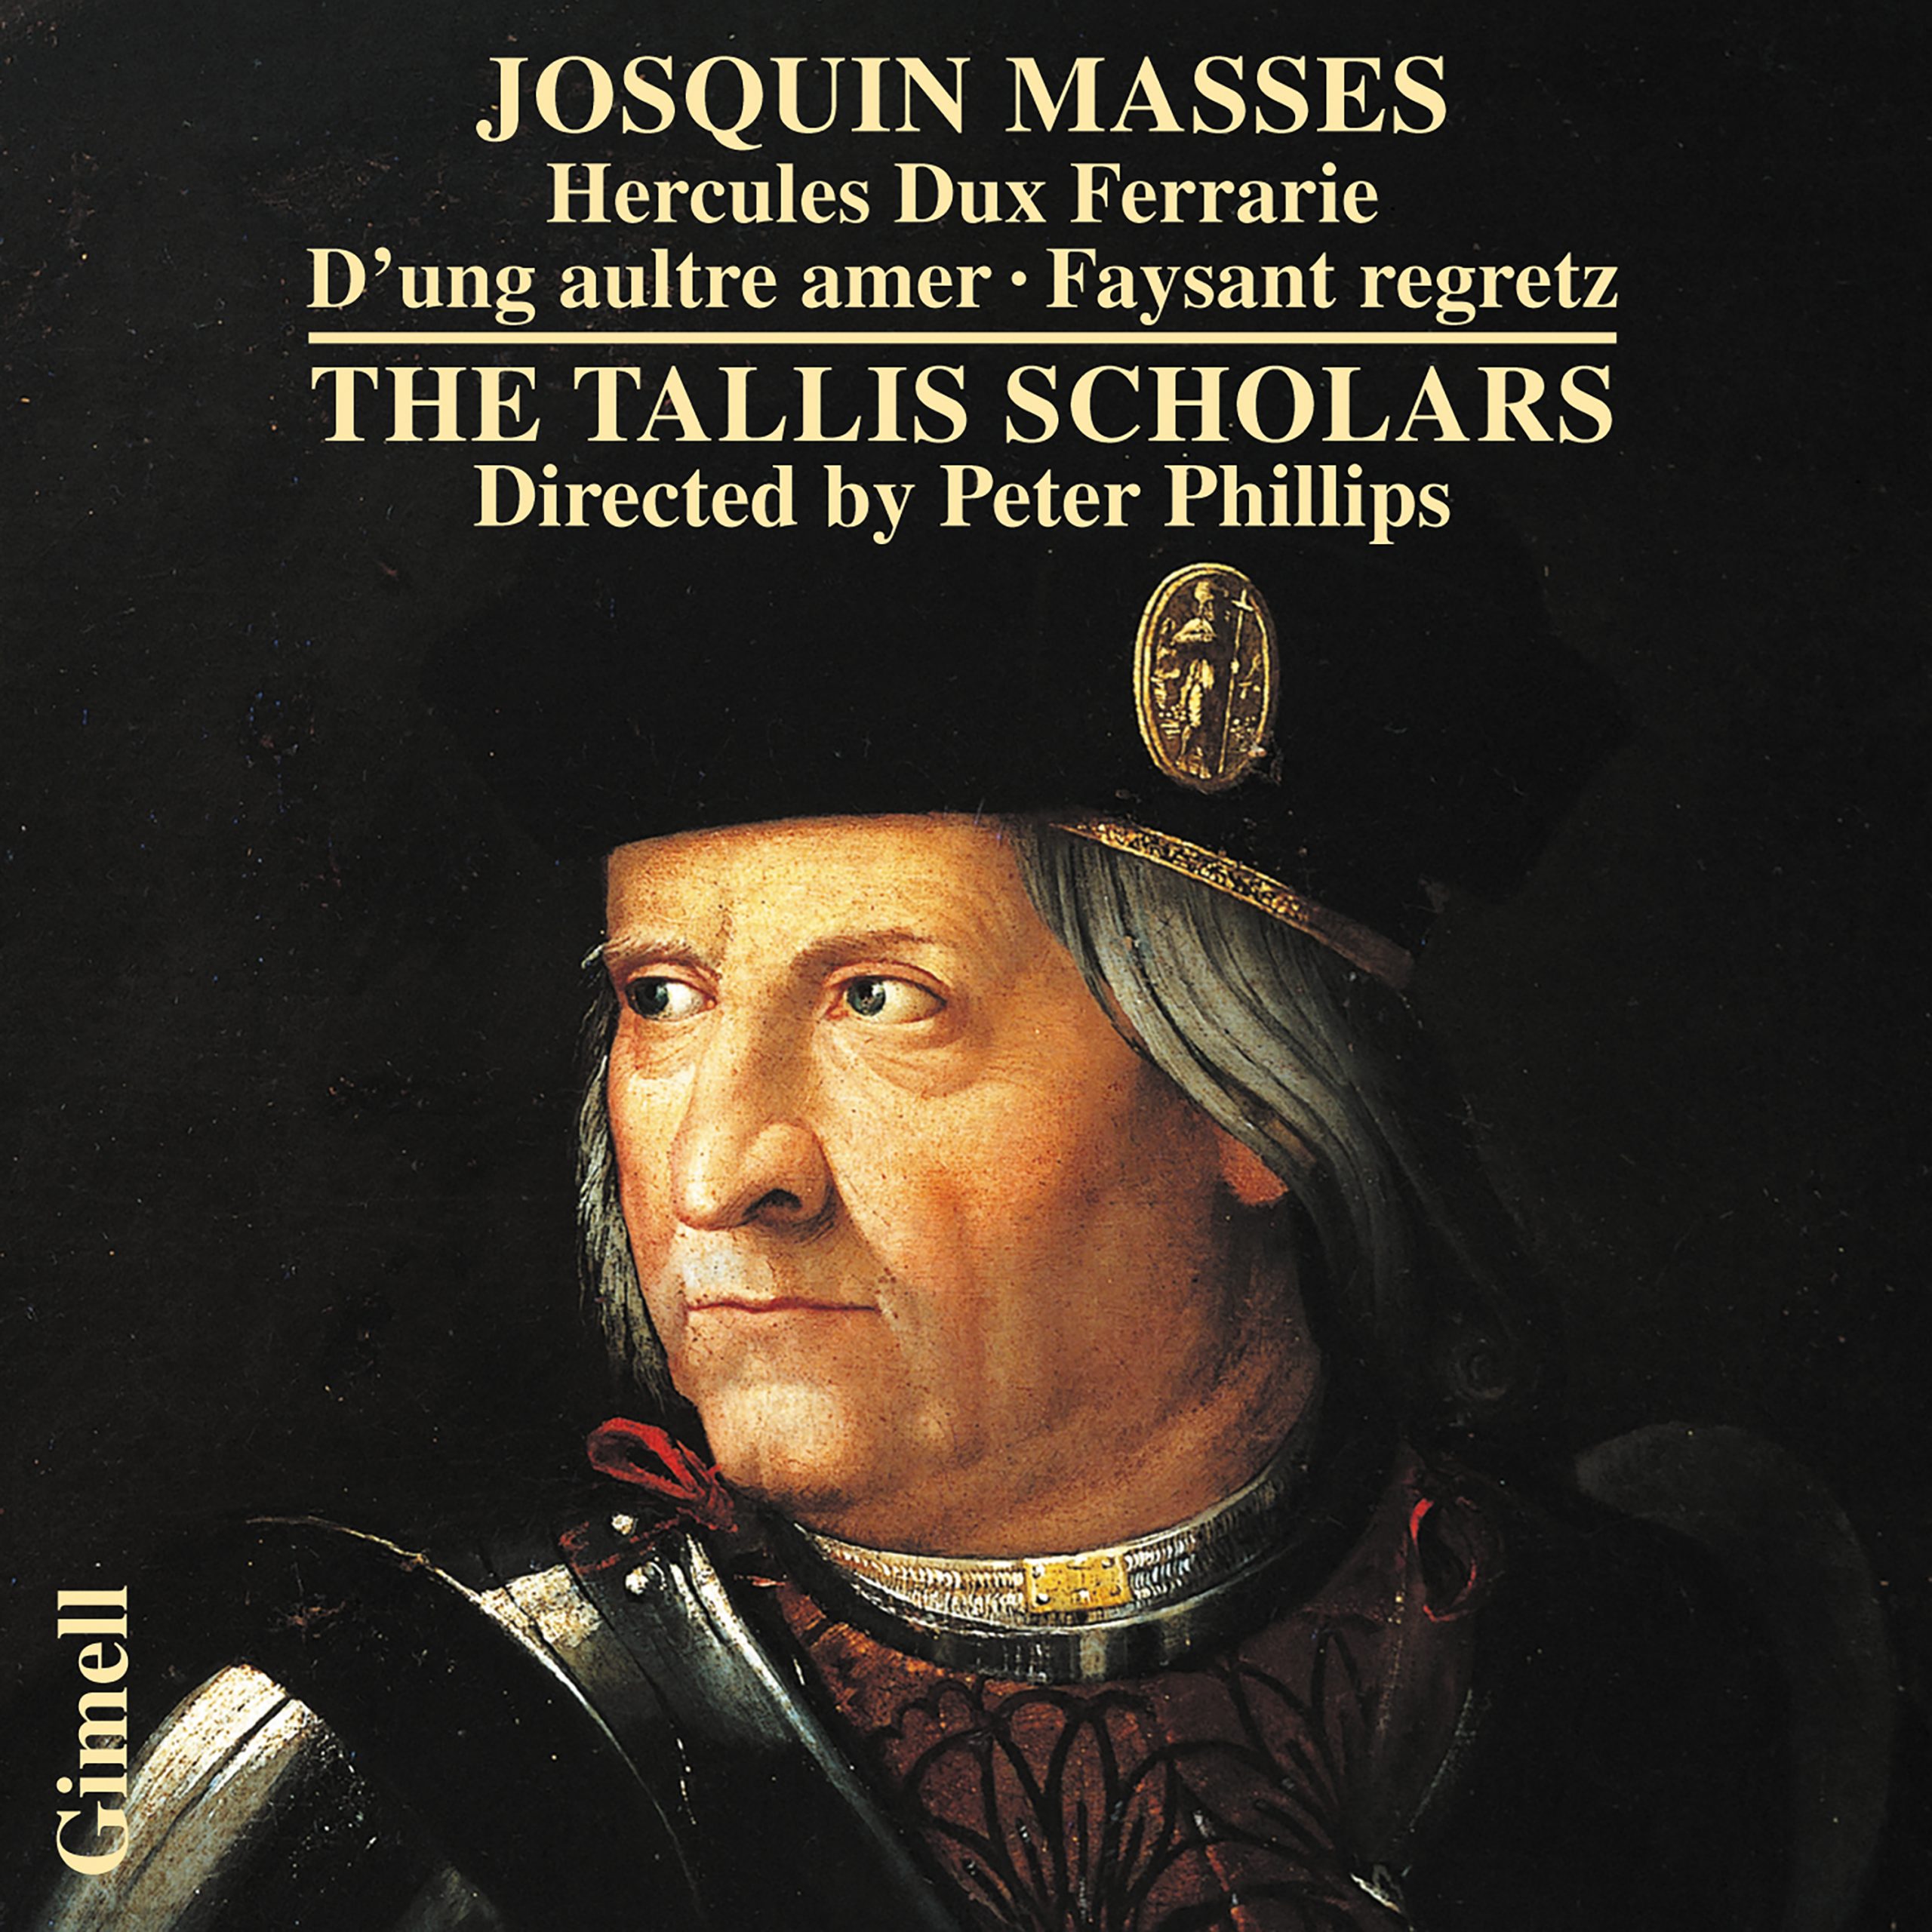 The Tallis Scholars complete their survey of Josquin's masses